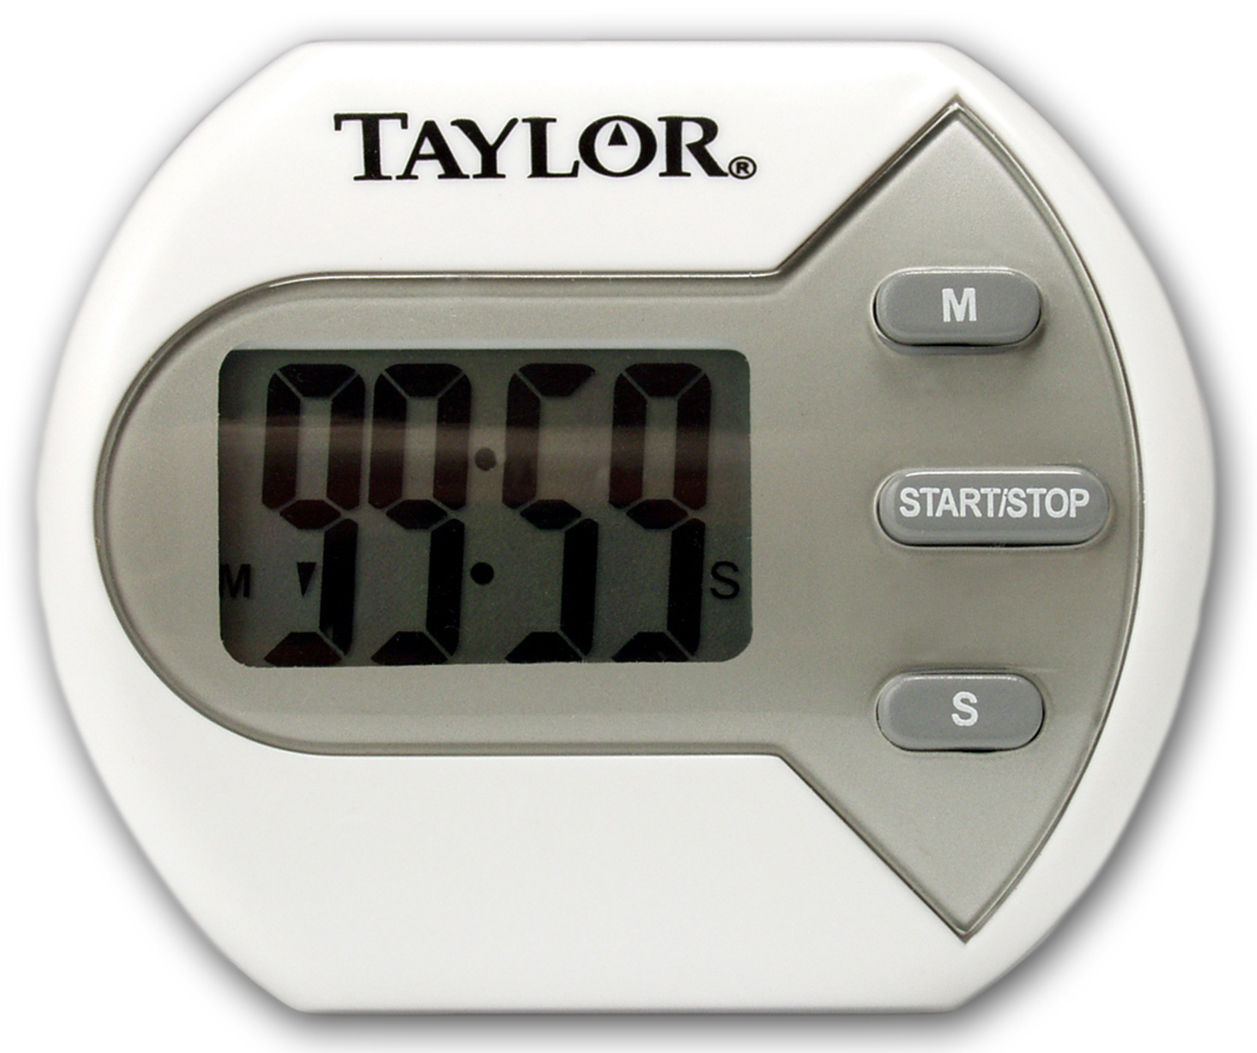 Taylor Super Loud Digital Timer – the international pantry